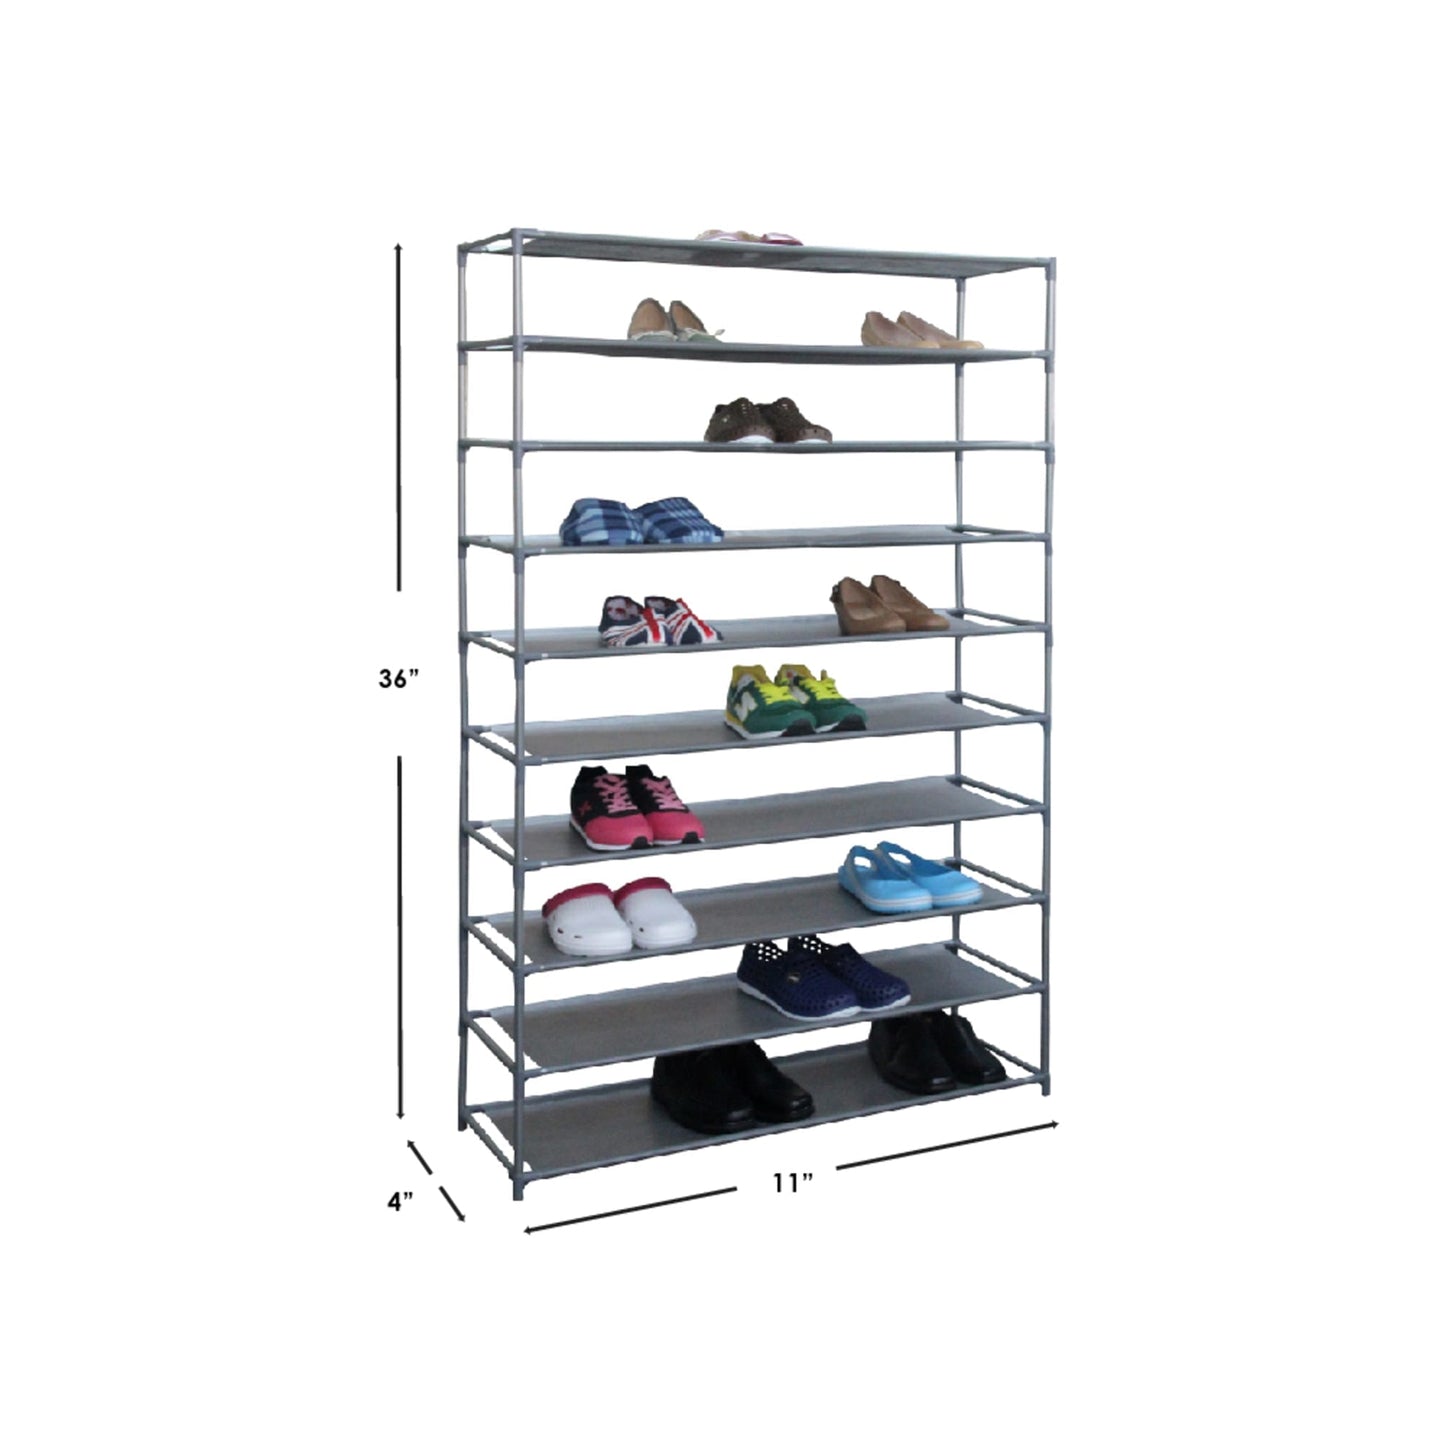 10 Tier Shoe Rack/Shelf